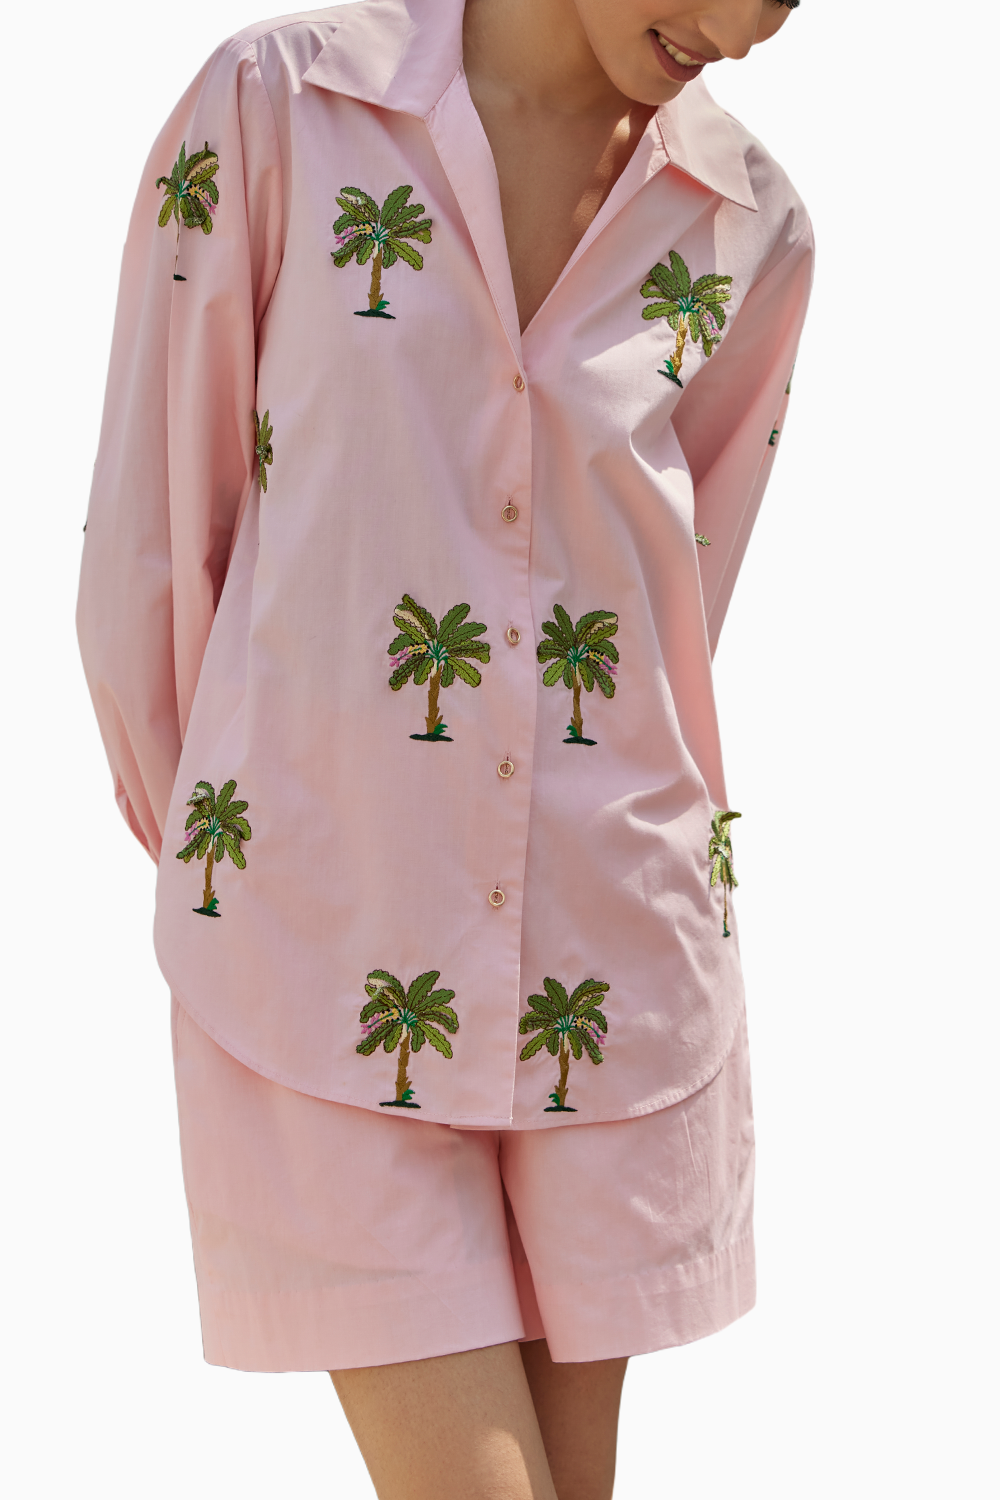 Peach Banana Tree Embroidered Shirt Set